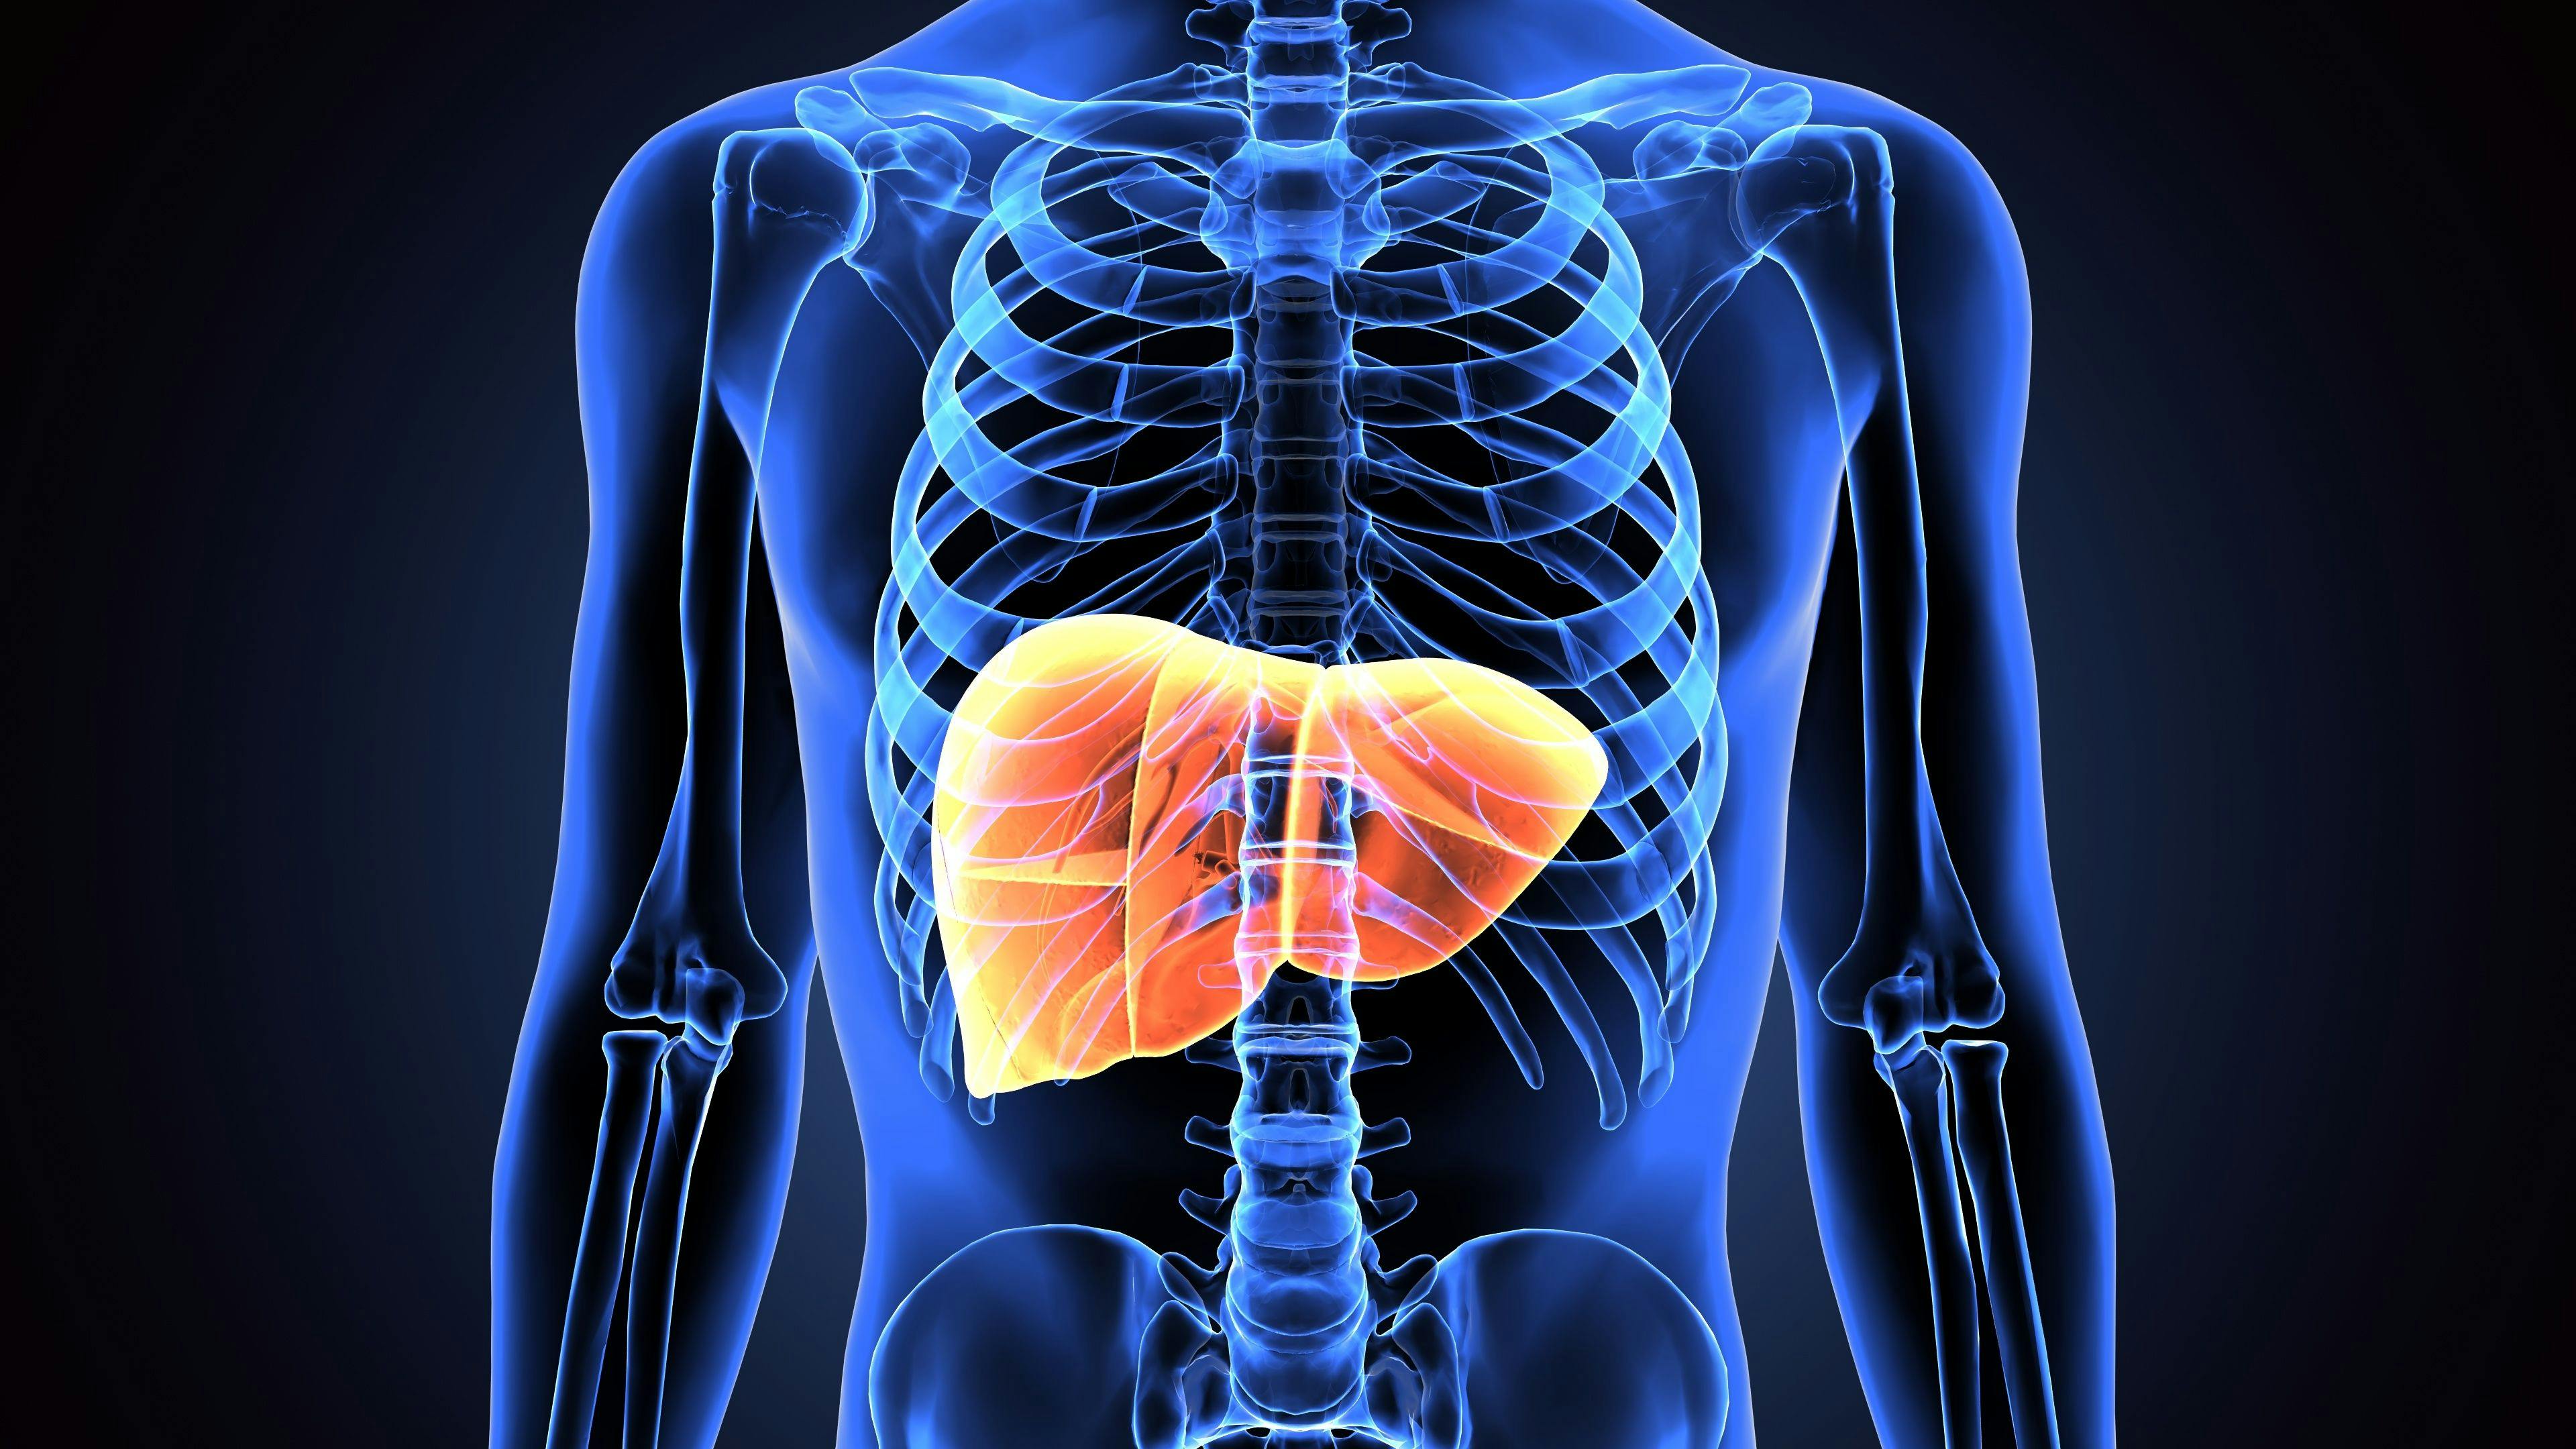 3d illustration of human body liver: © PIC4U - stock.adobe.com